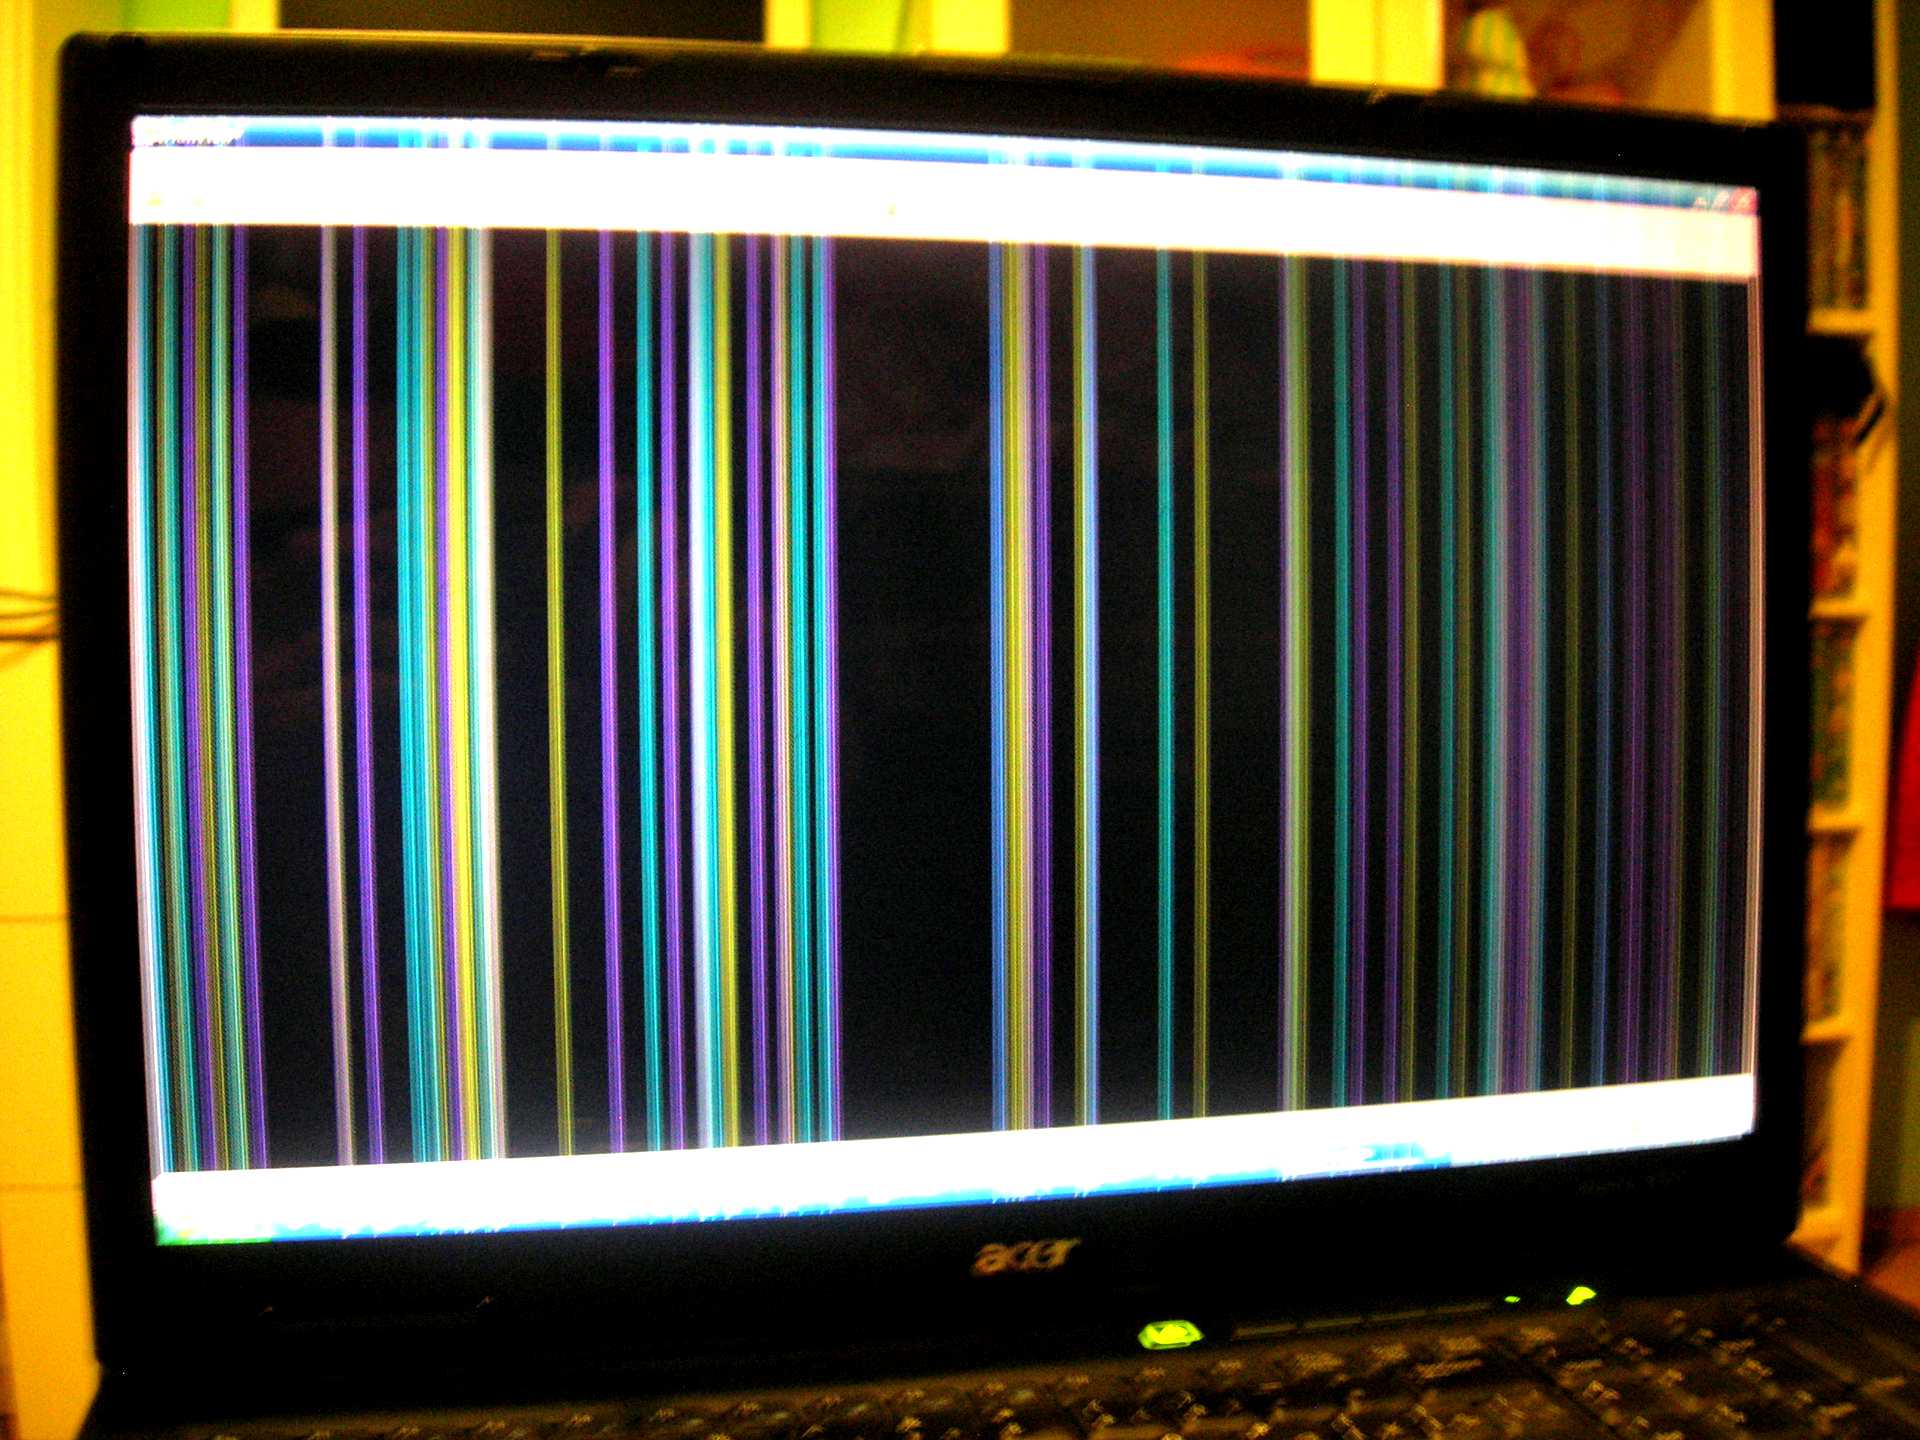 Телевизор samsung вертикальные полосы. Acer 1917 вертикальные полосы. Цветные полосы на мониторе. Вертикальные полосы на матрице. Полосы на экране телевизора.